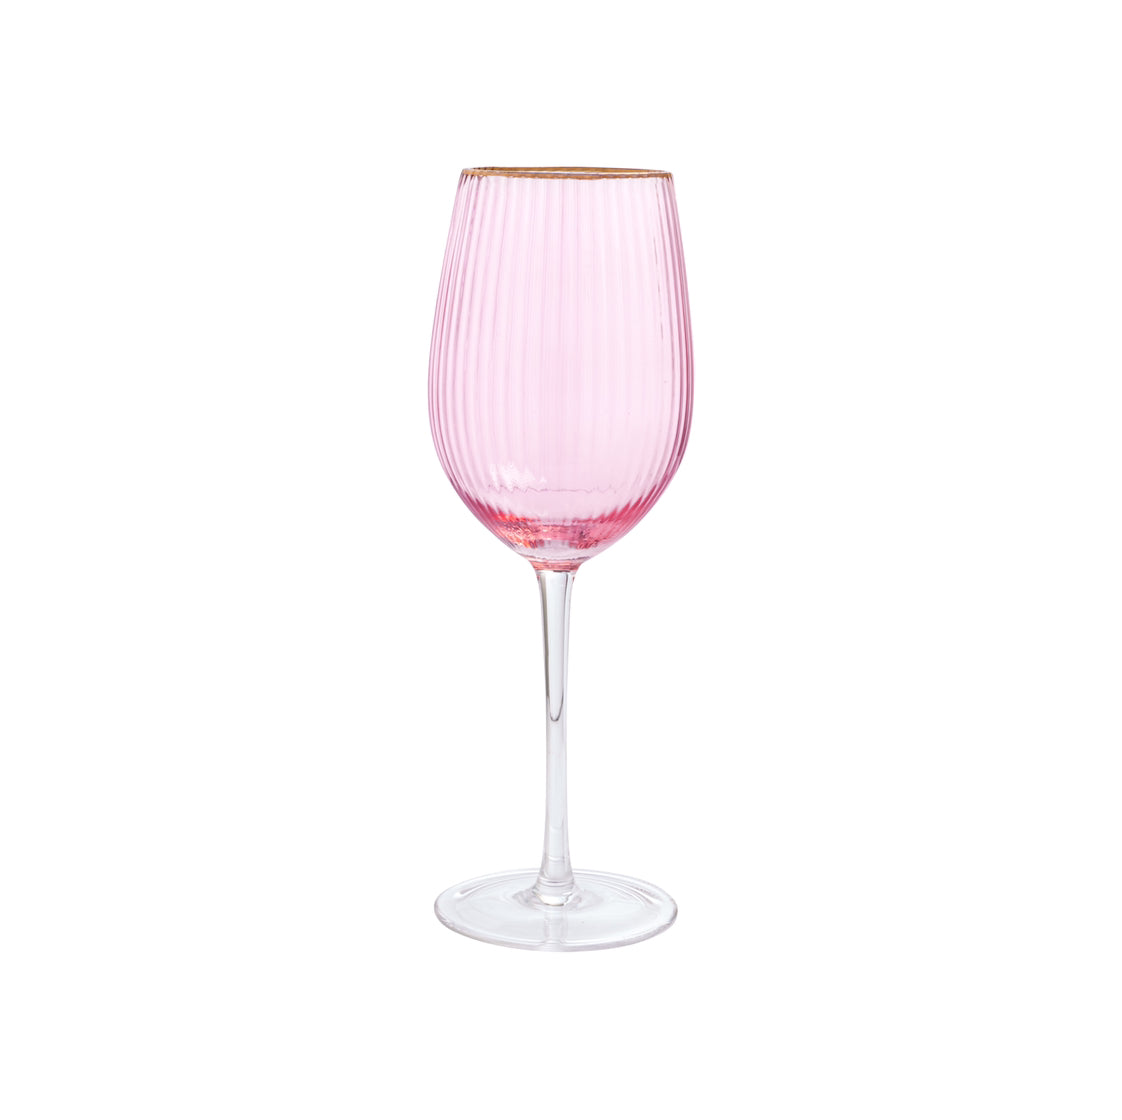 Vikko Decor Pink Gold Rimmed Wine Glasses, Set of 6